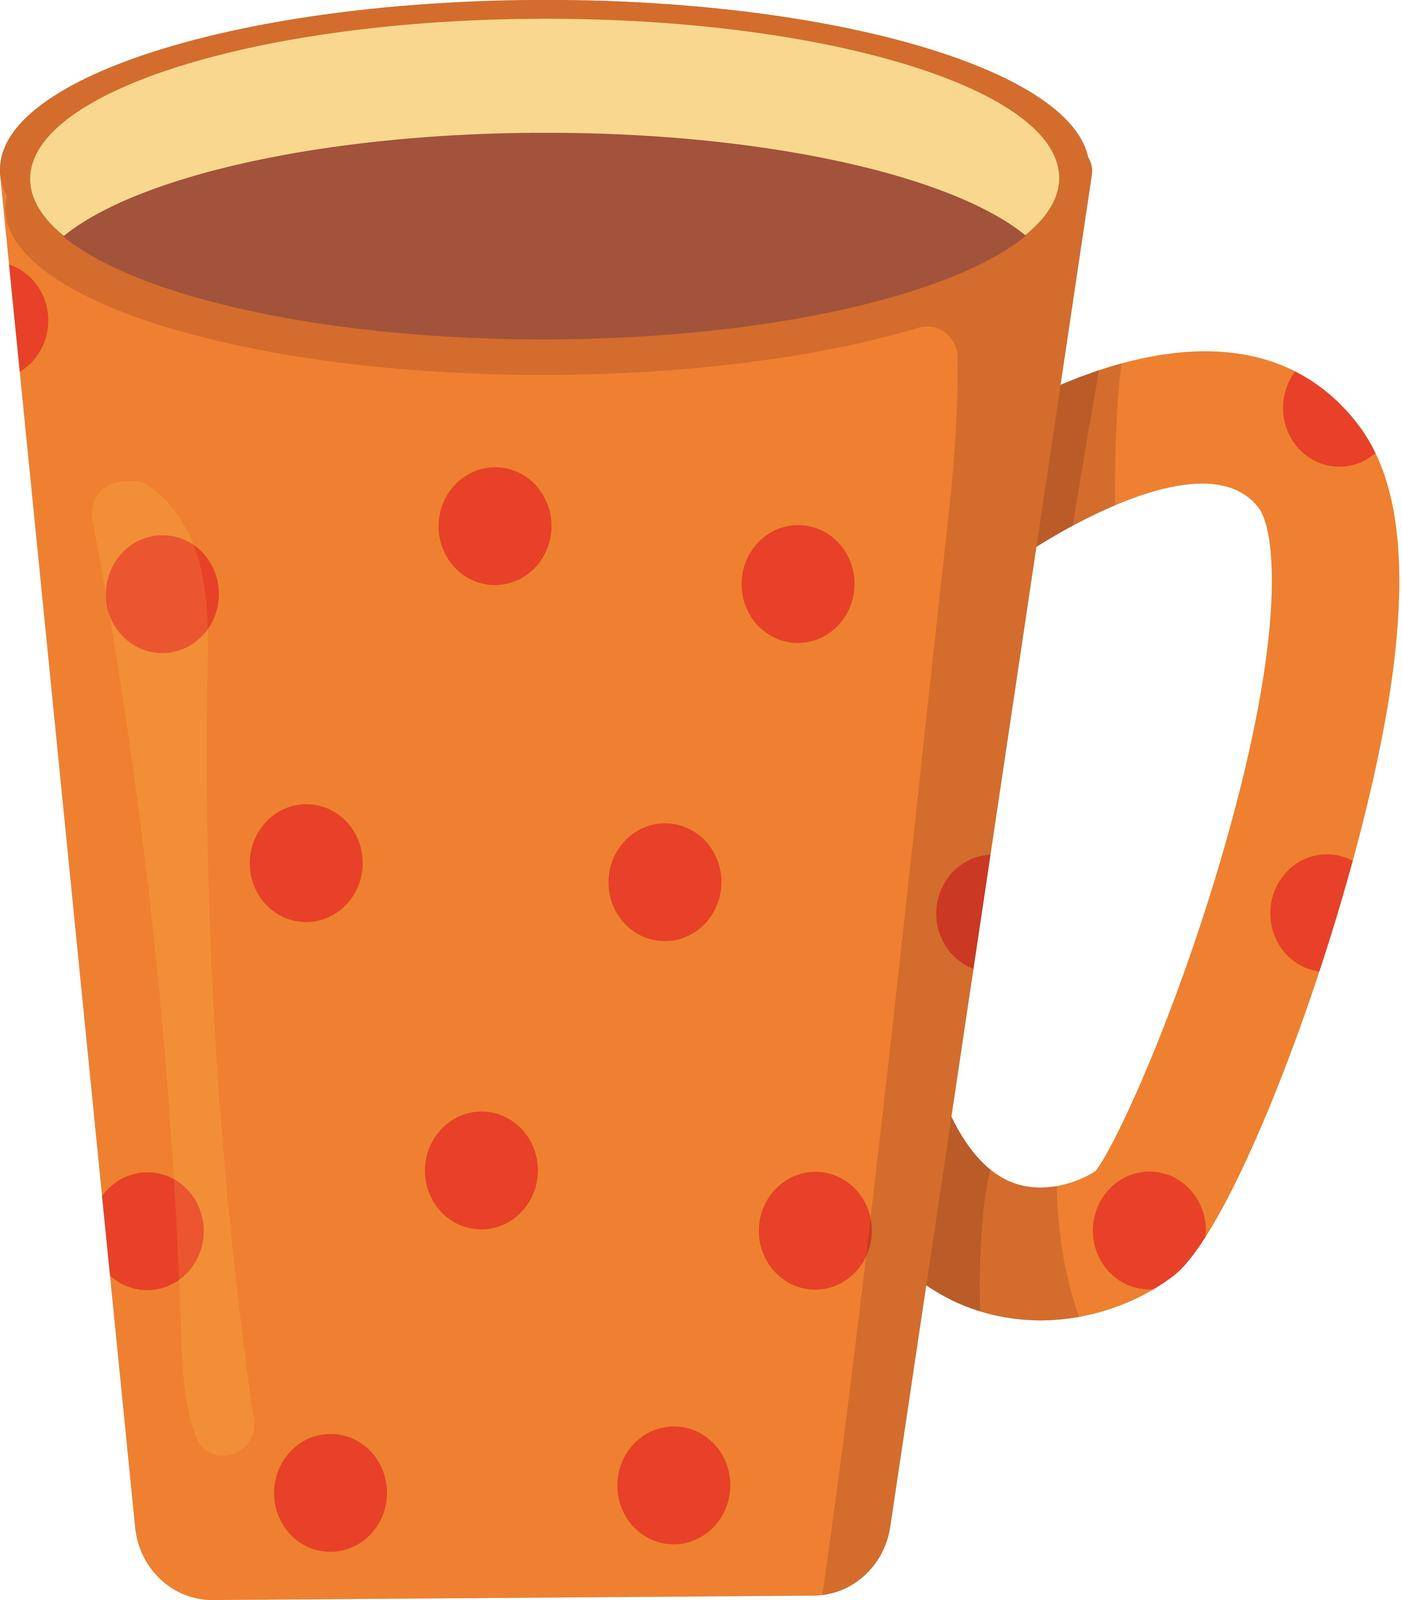 Cup or mug of tea. Ceramic cute mug with coffe bean print. by Daaridna